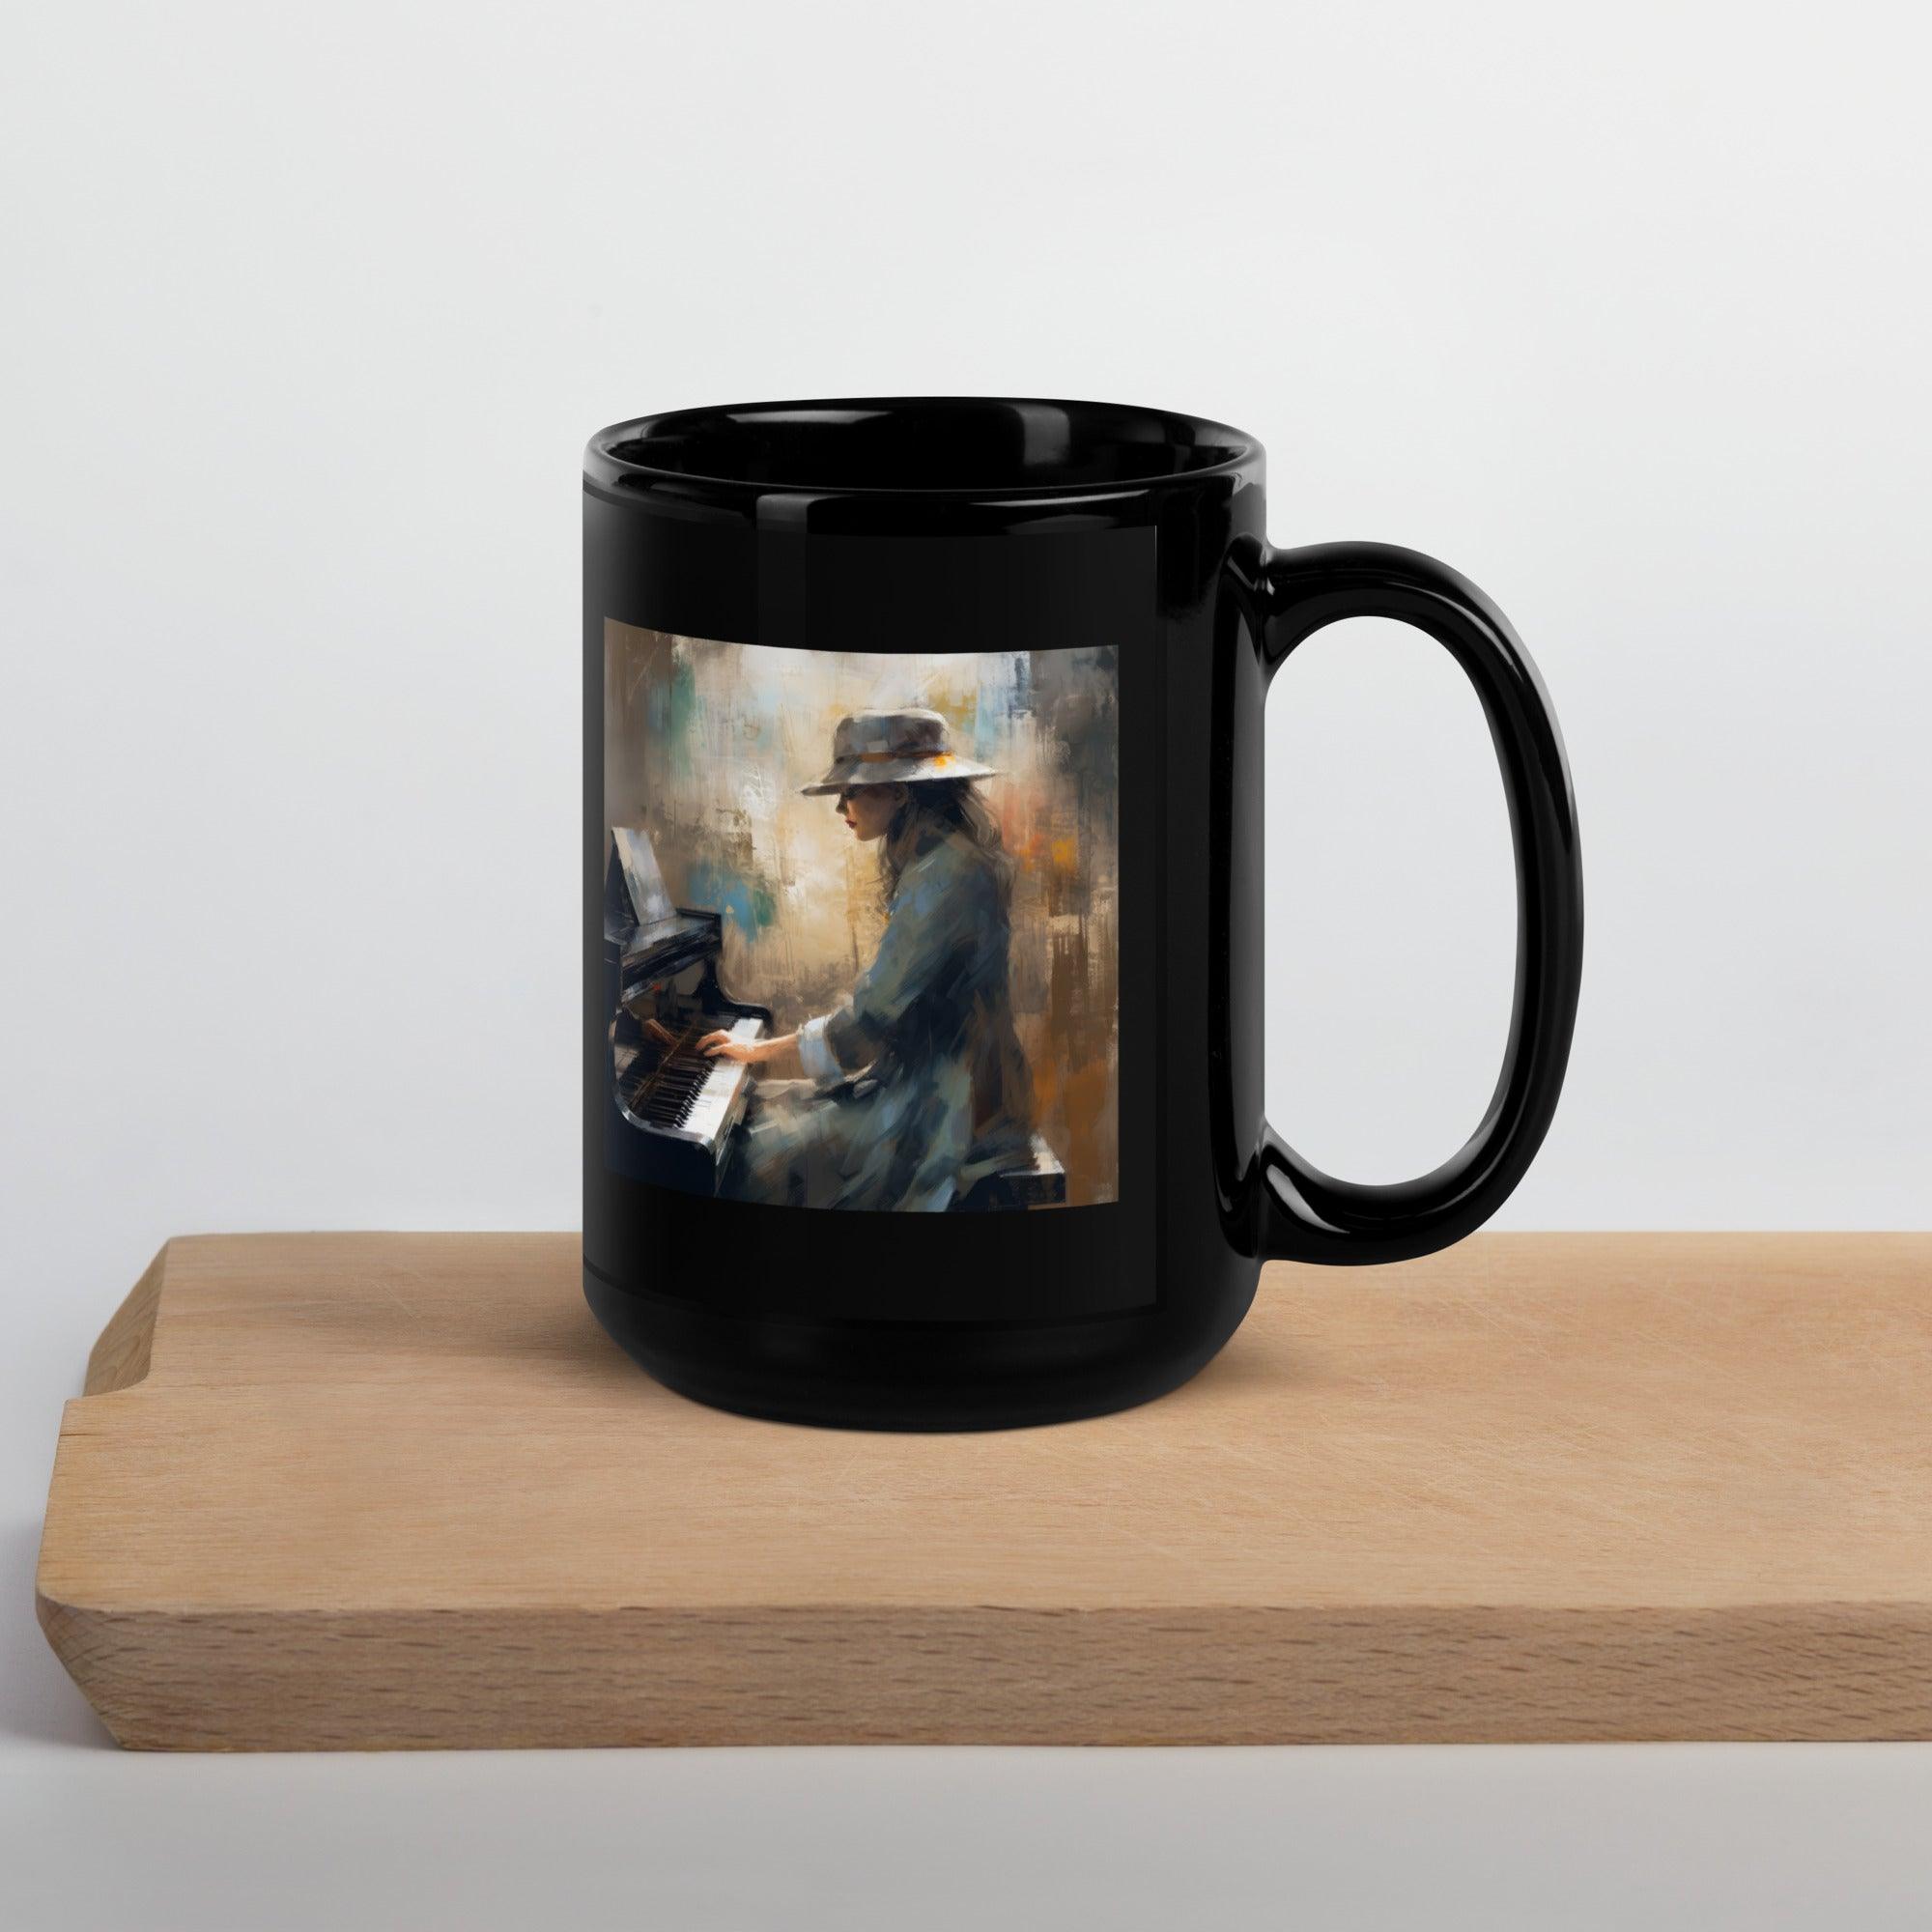 Harmonic Horizon Black Glossy Mug filled with steaming coffee